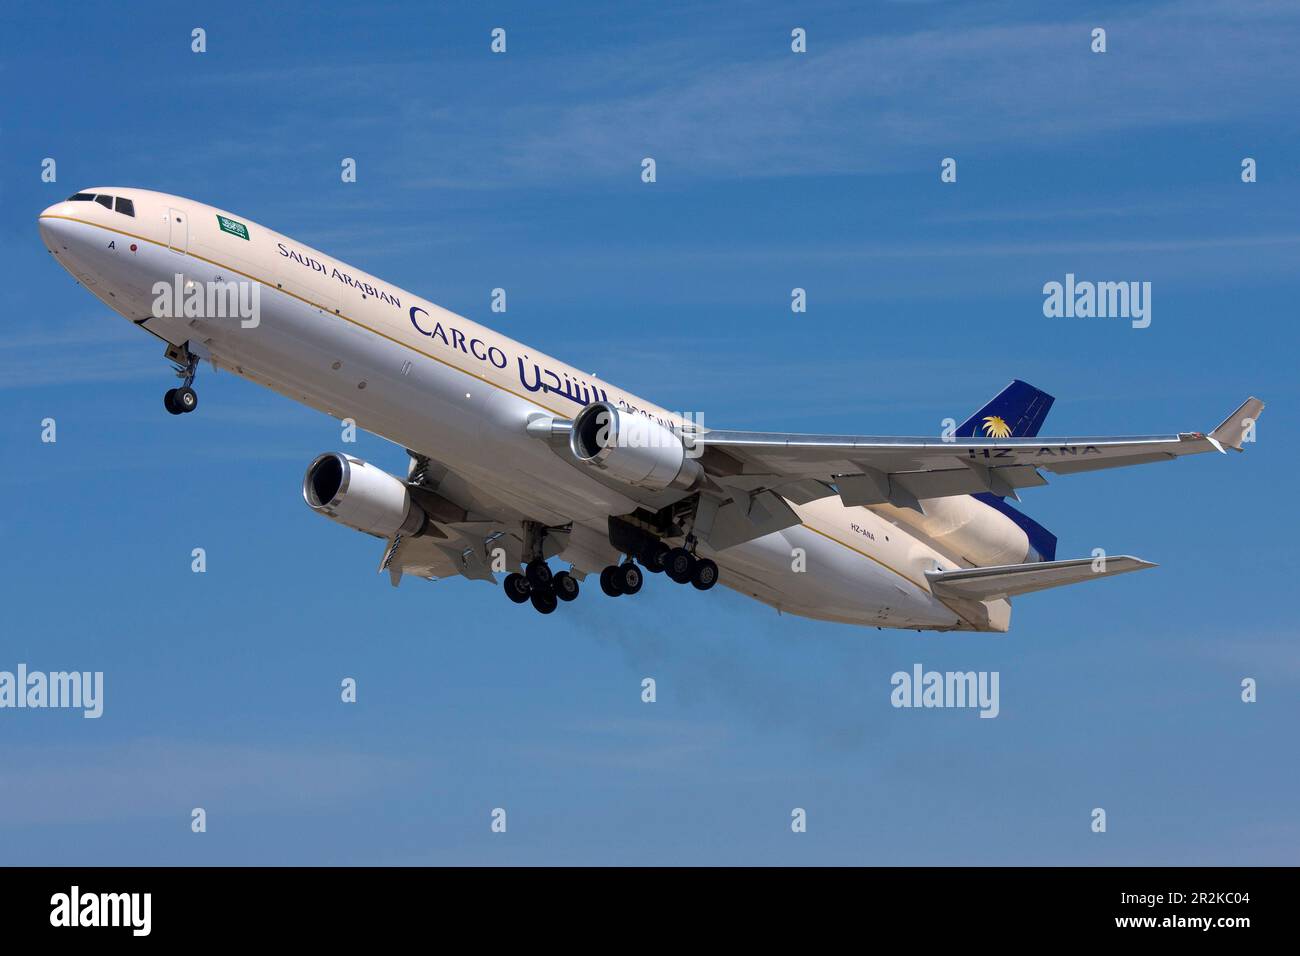 Saudi Arabian Airlines Cargo McDonnell Douglas MD-11F (REG: HZ-ANA) taking off from runway 31. Stock Photo